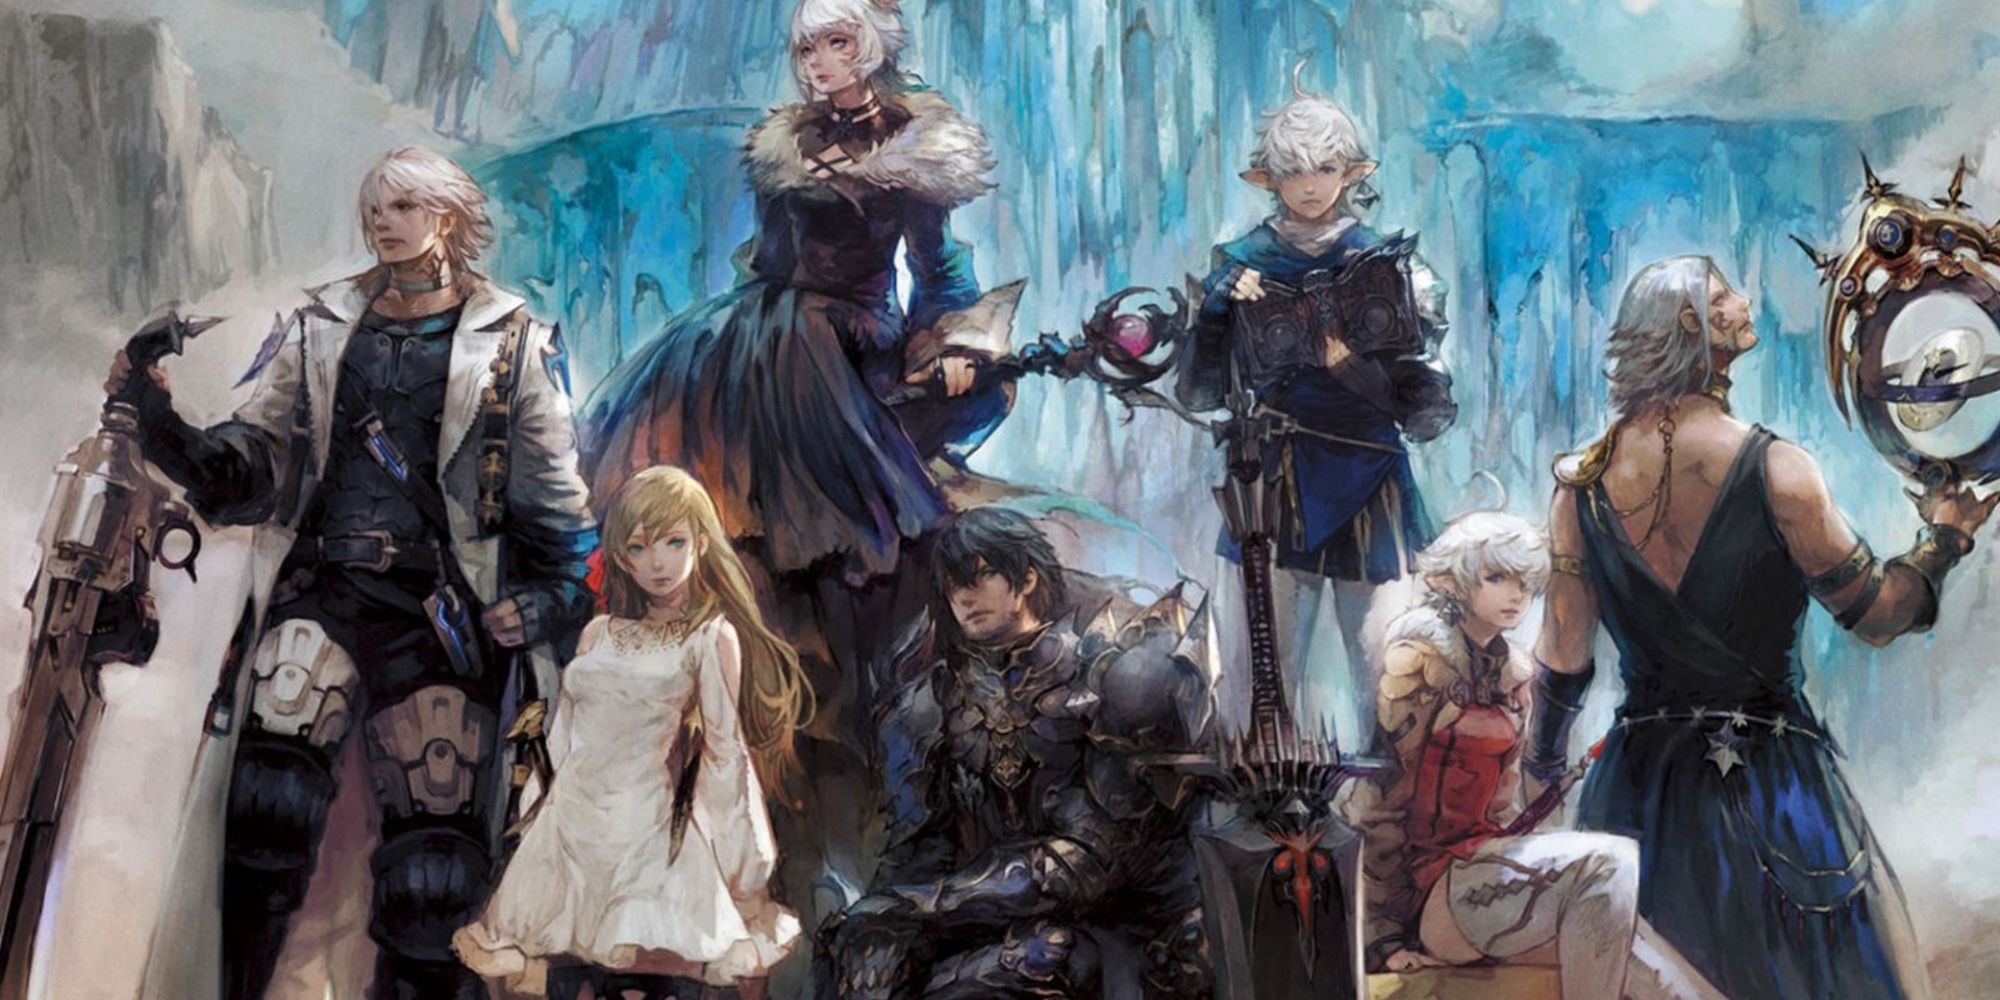 Square Enix in Talks to Bring Final Fantasy 14 to Xbox